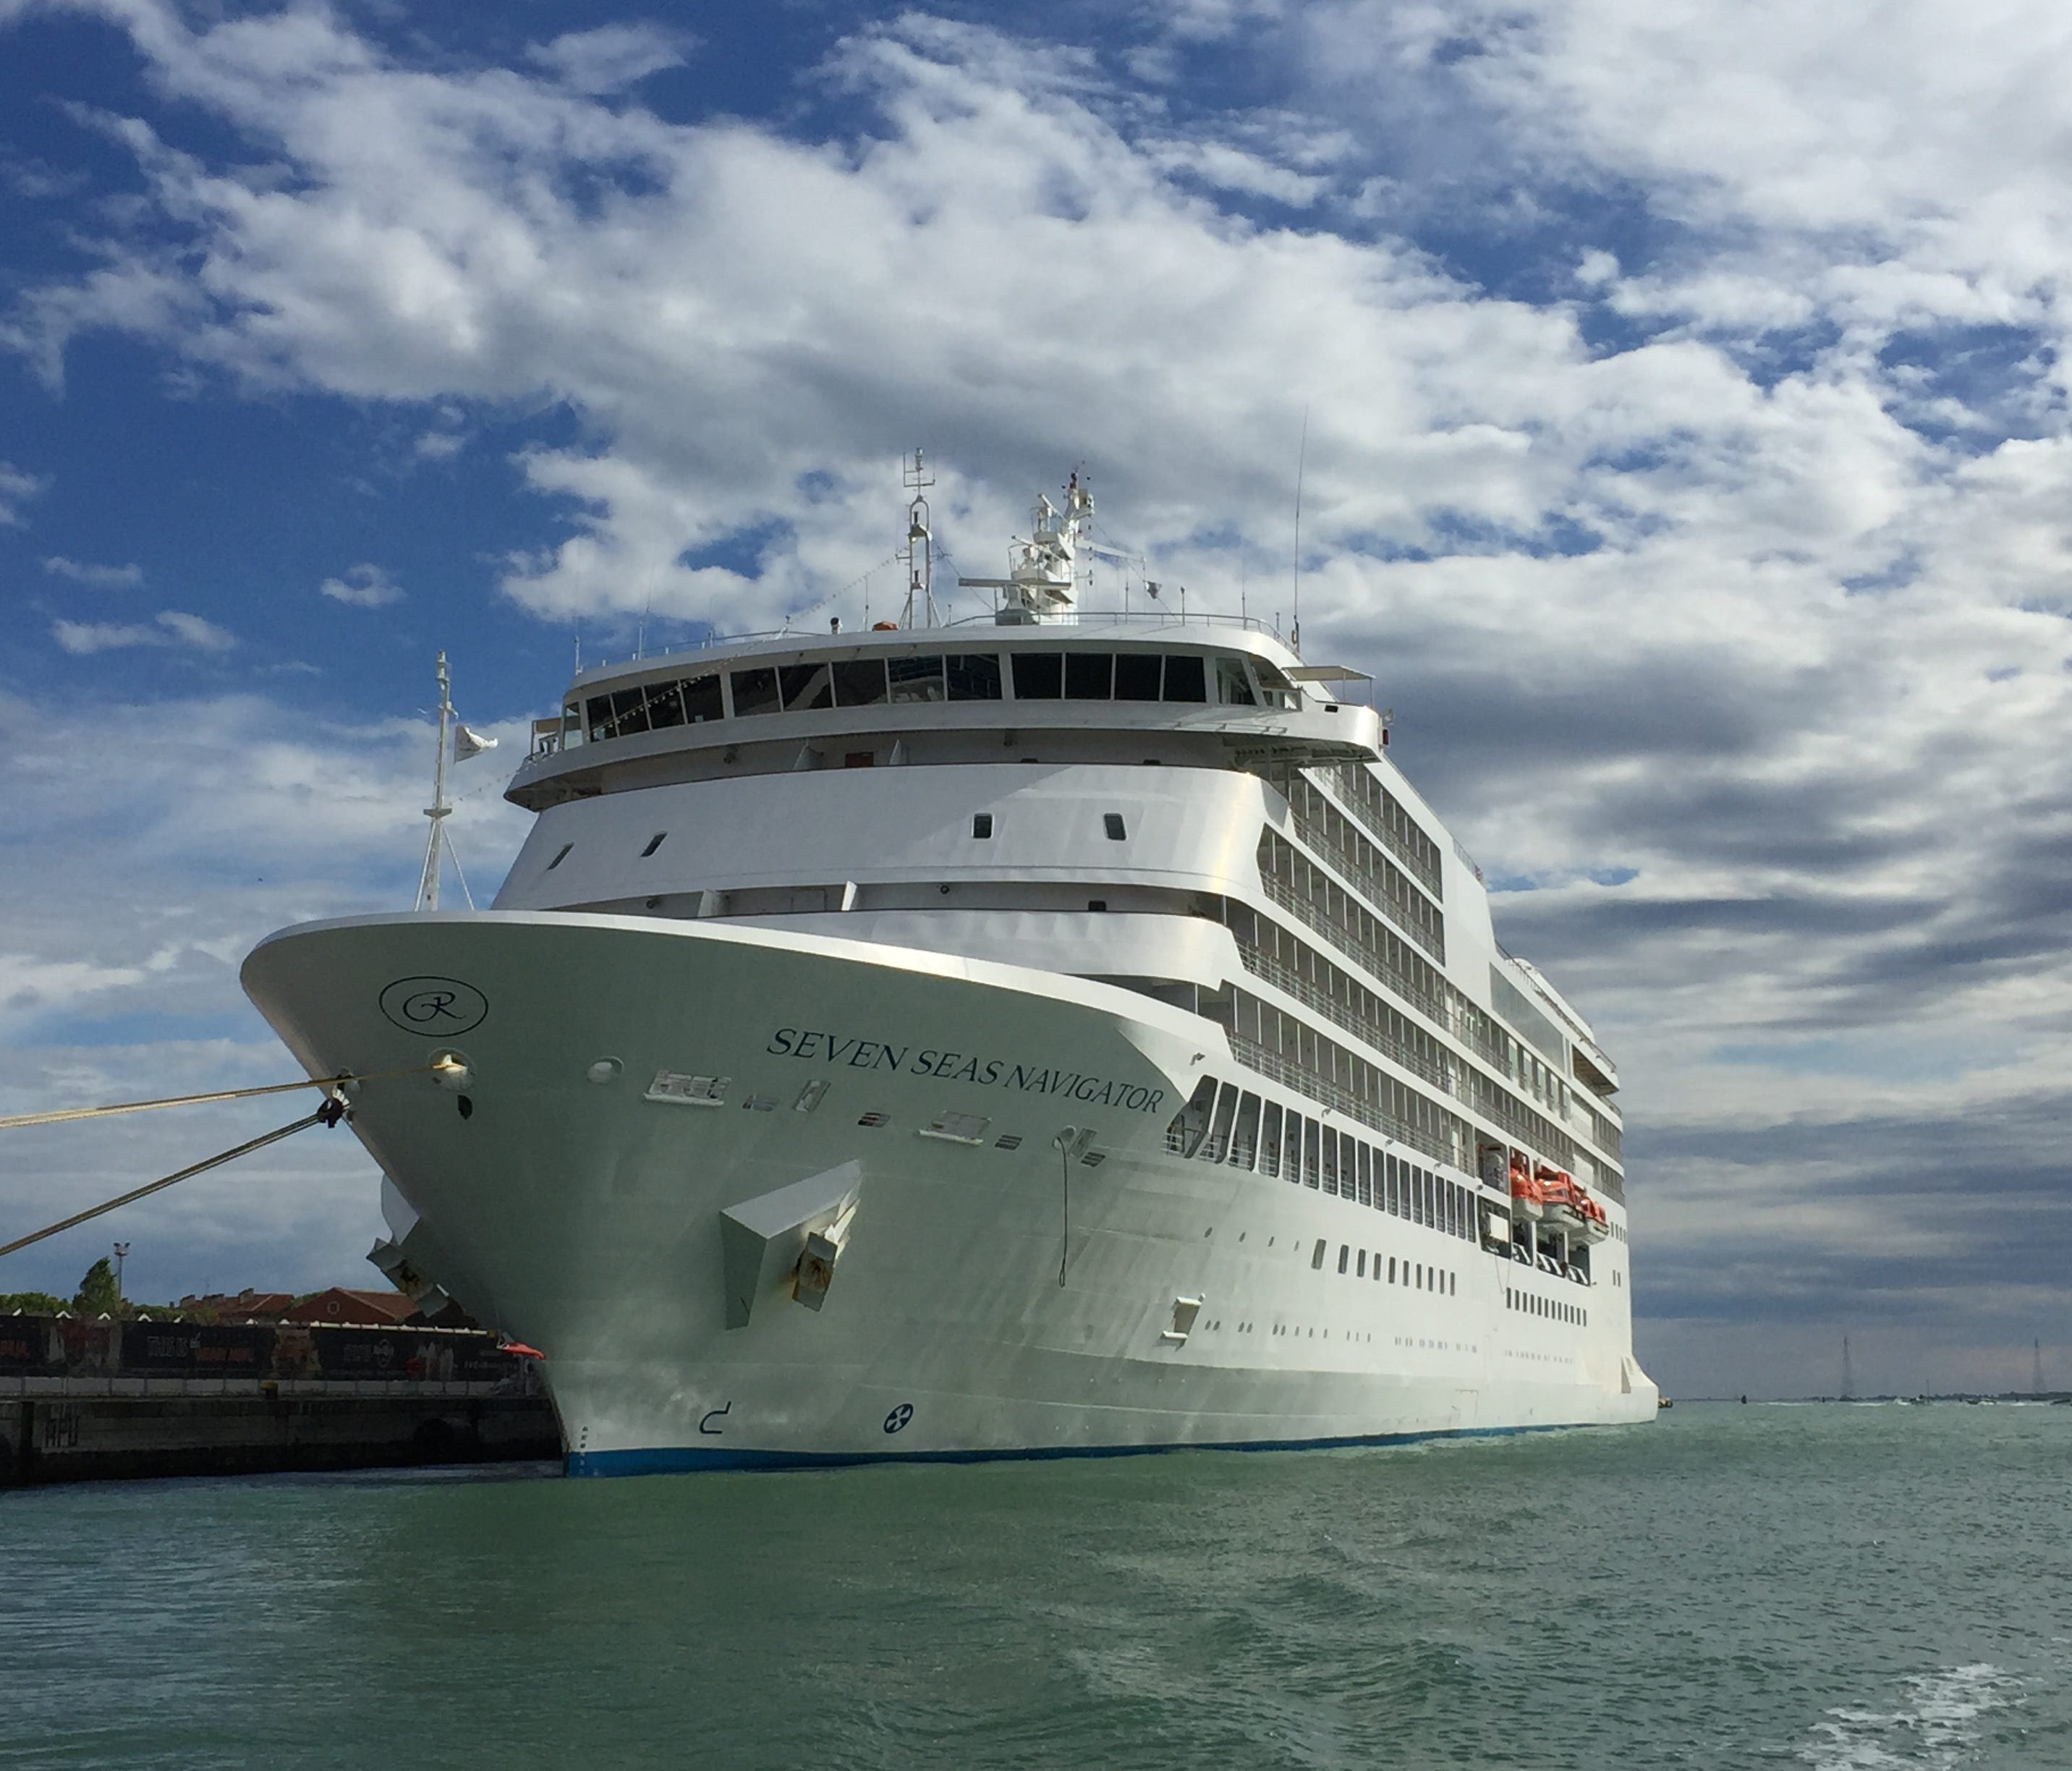 The Seven Seas Navigator docked in Venice, Italy.